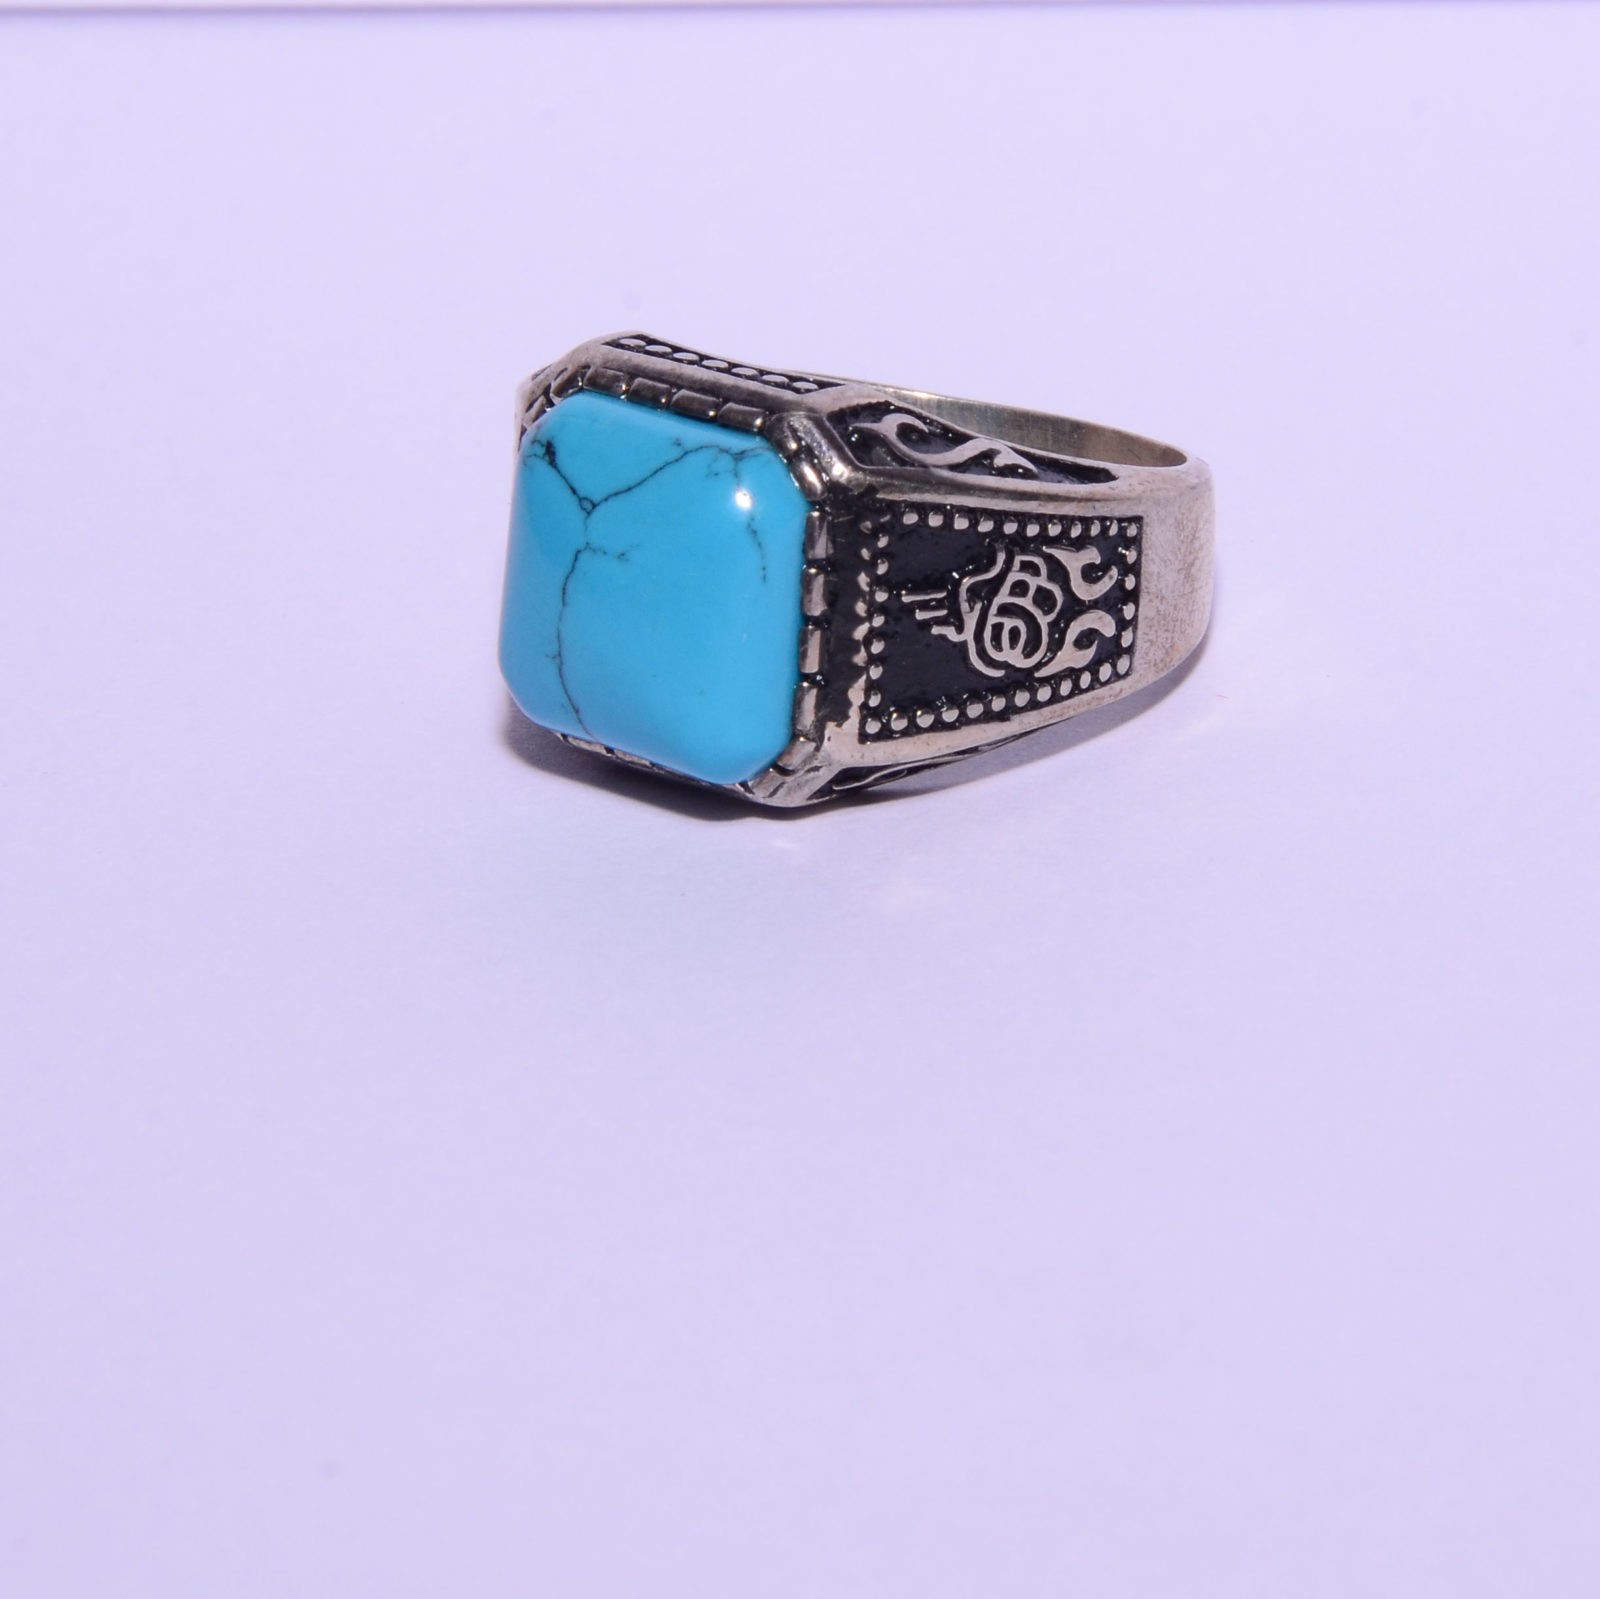 Sky Blue Oval-Cut Larimar Natural Gemstones Sterling Silver Ring at Rs 3000  | नीली सफायर रिंग in Jaipur | ID: 21937015633